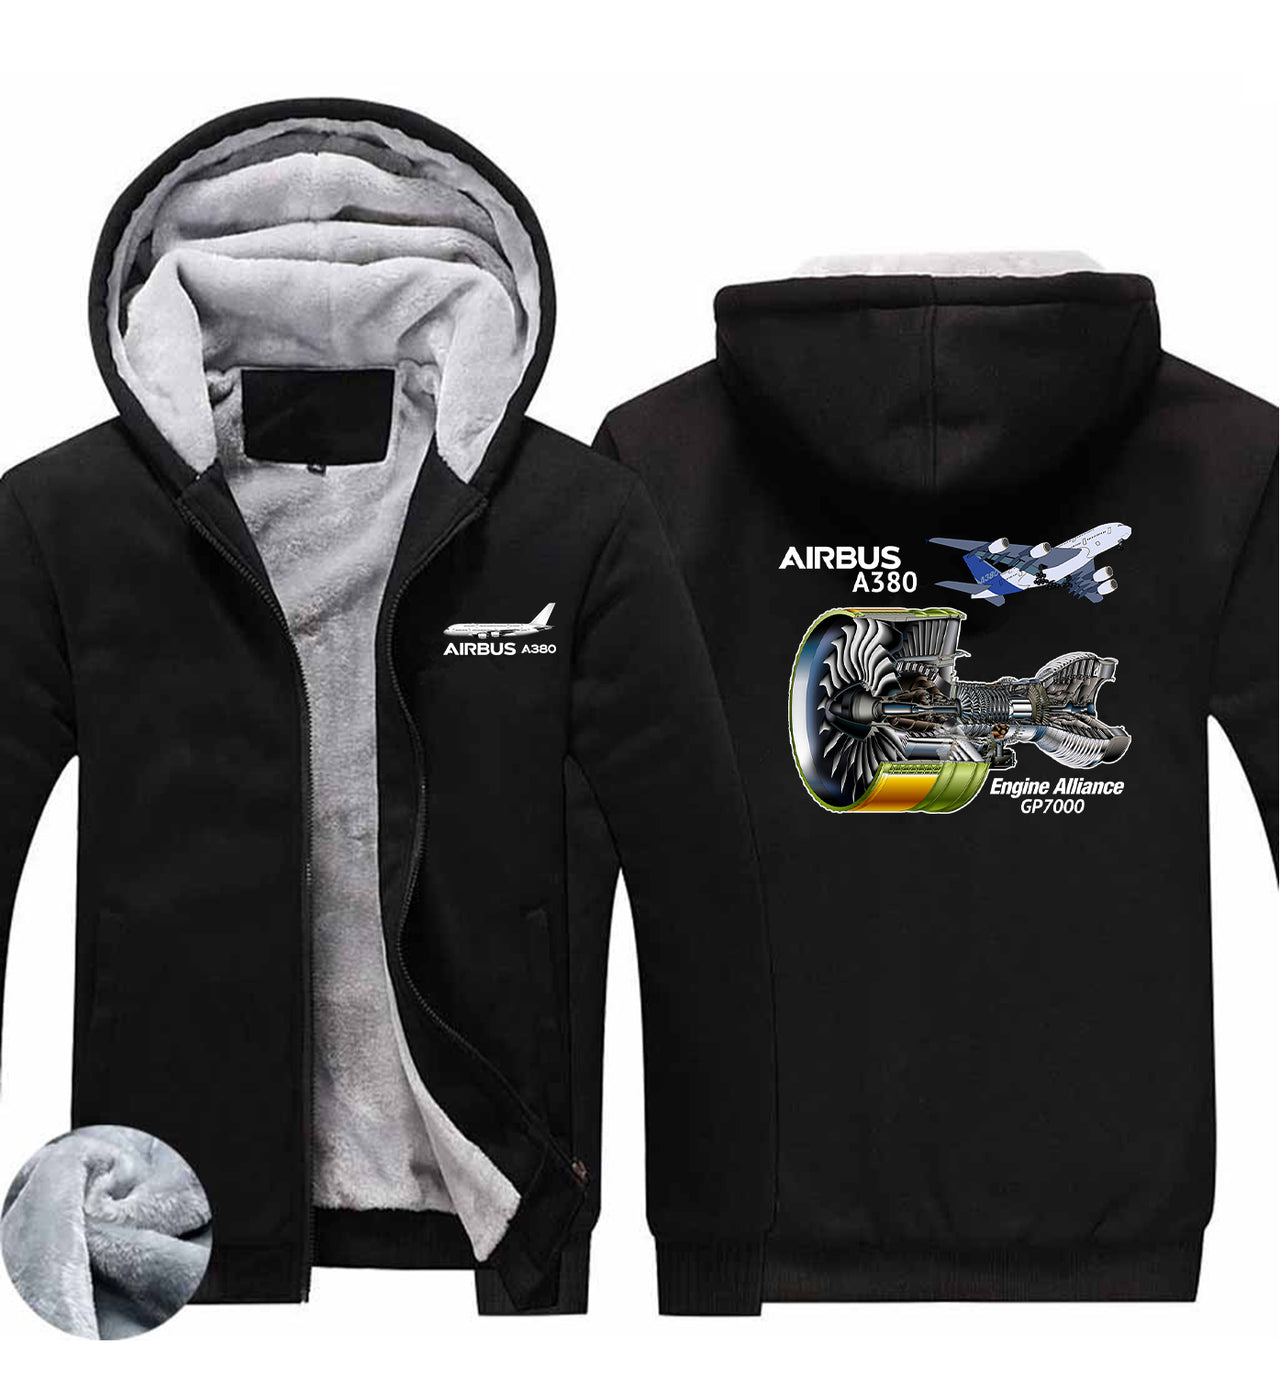 Airbus A380 & GP7000 Engine Designed Zipped Sweatshirts